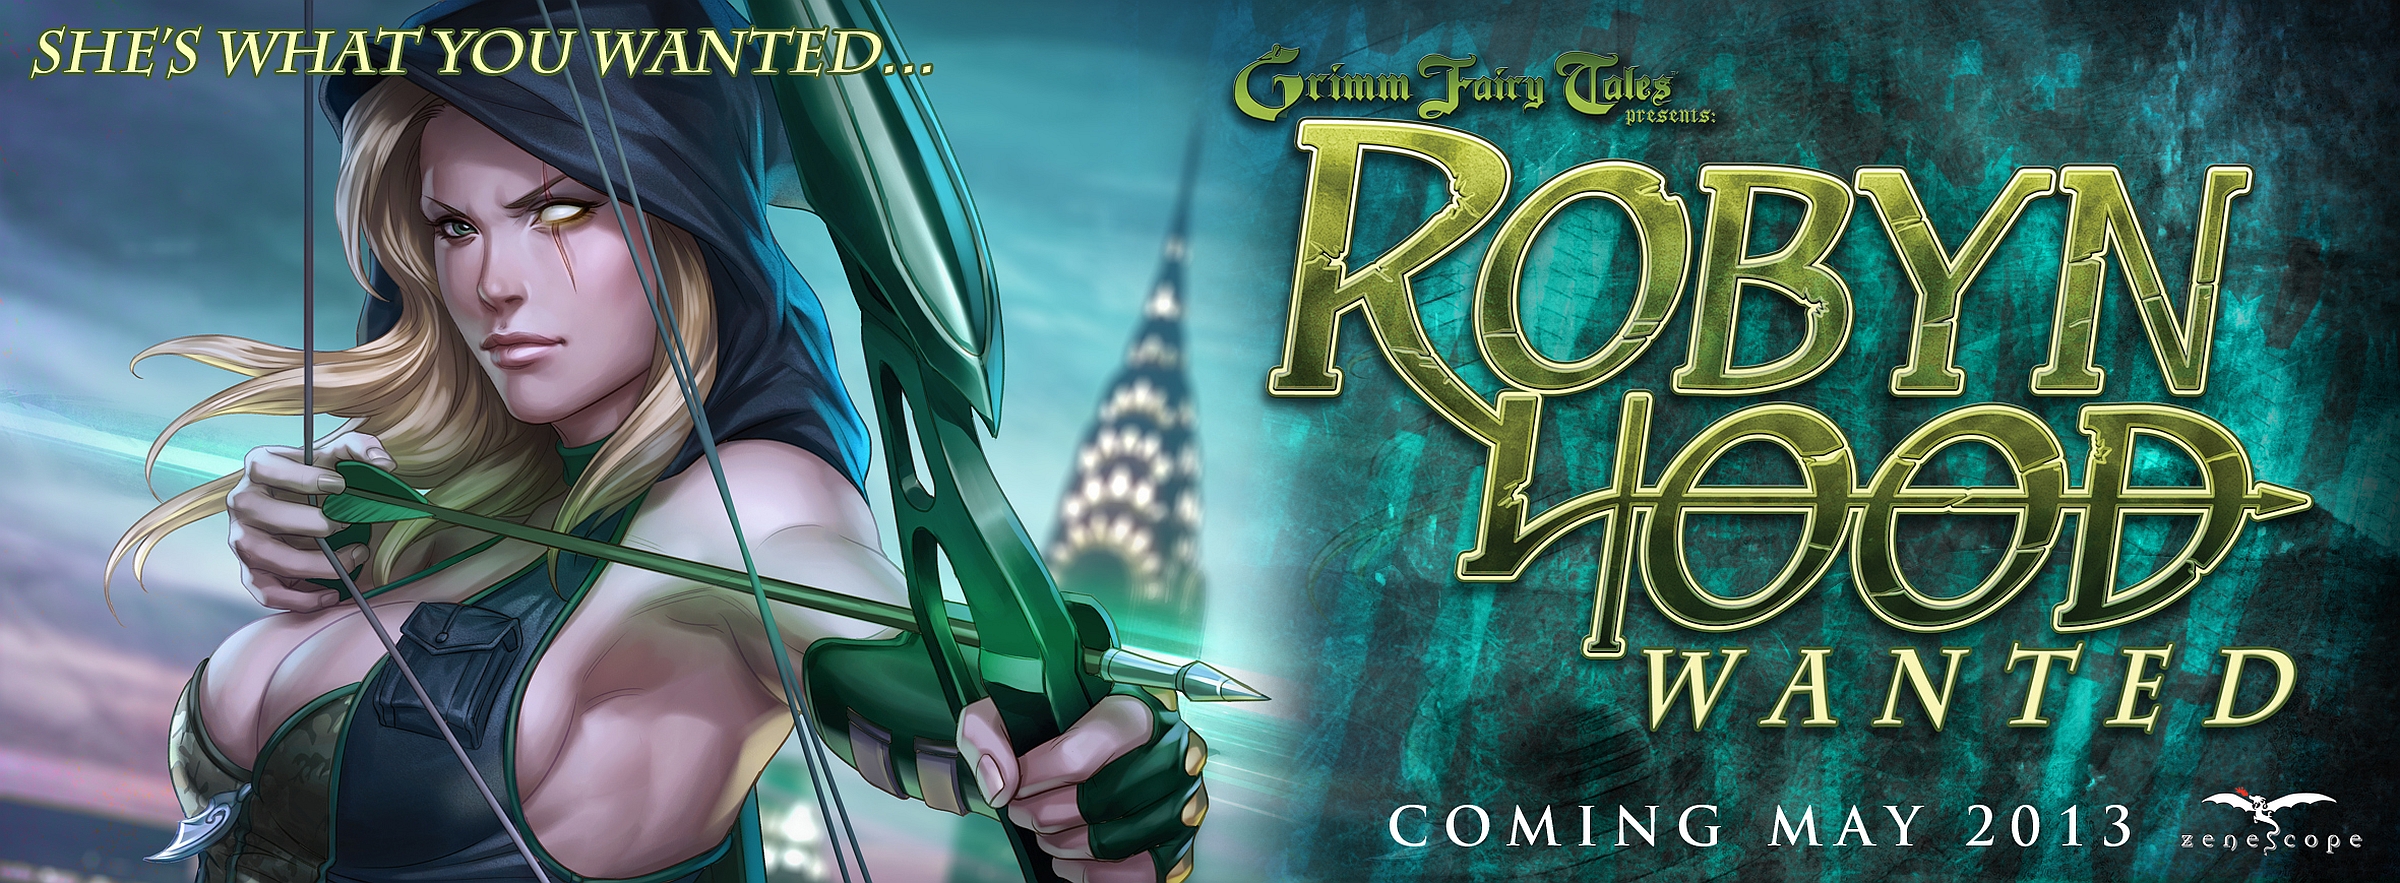 Comics Grimm Fairy Tales: Robyn Hood HD Wallpaper | Background Image